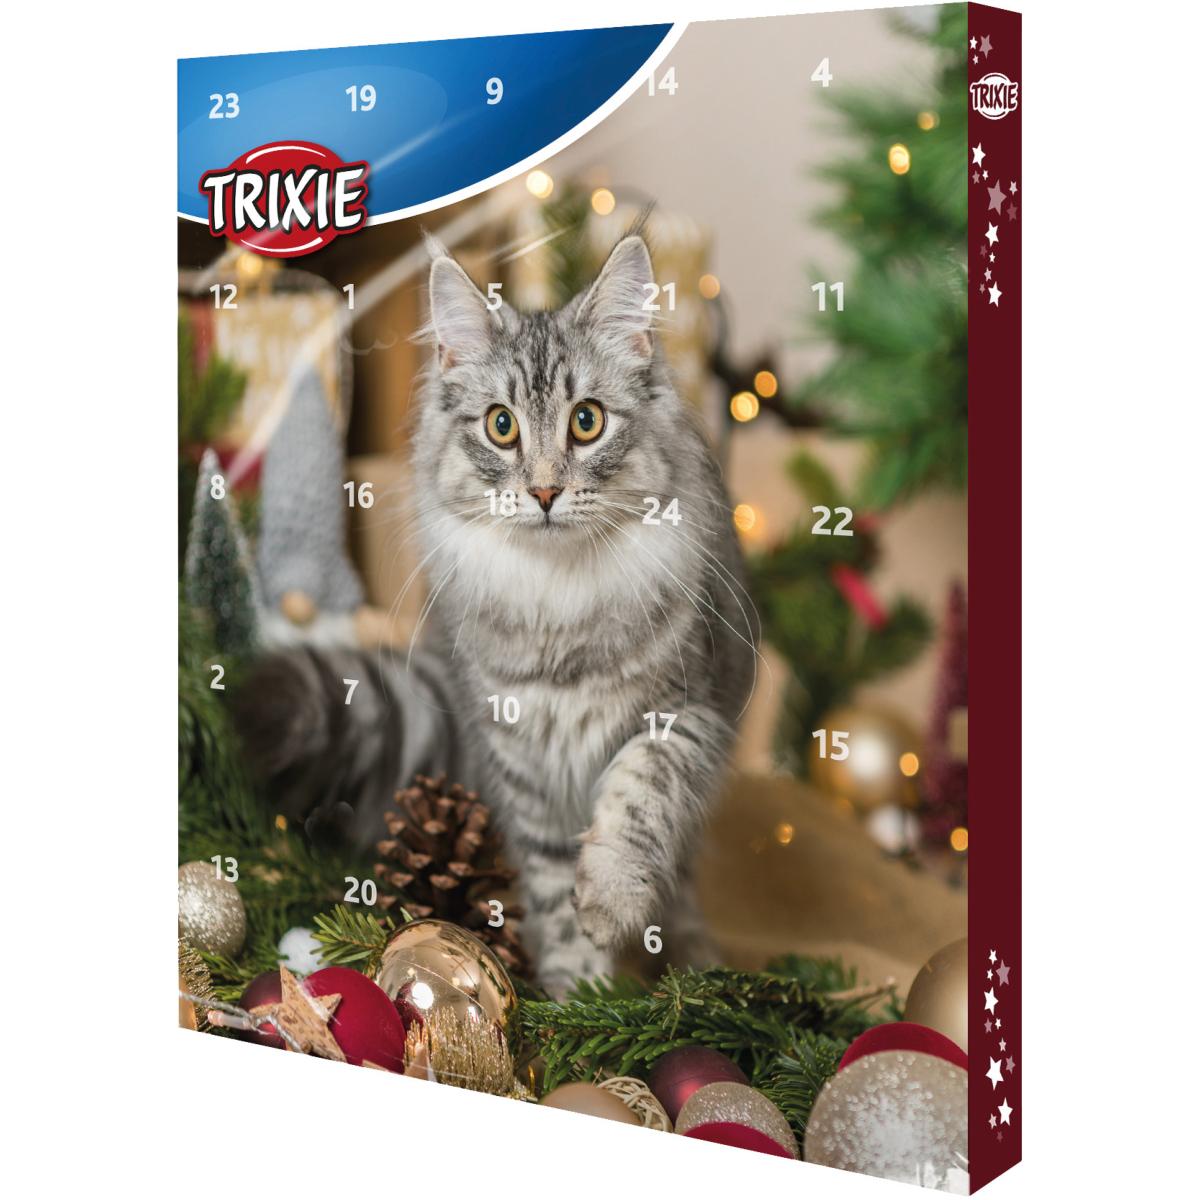 Trixie | Cat Christmas Gift | Treat Advent Calendar